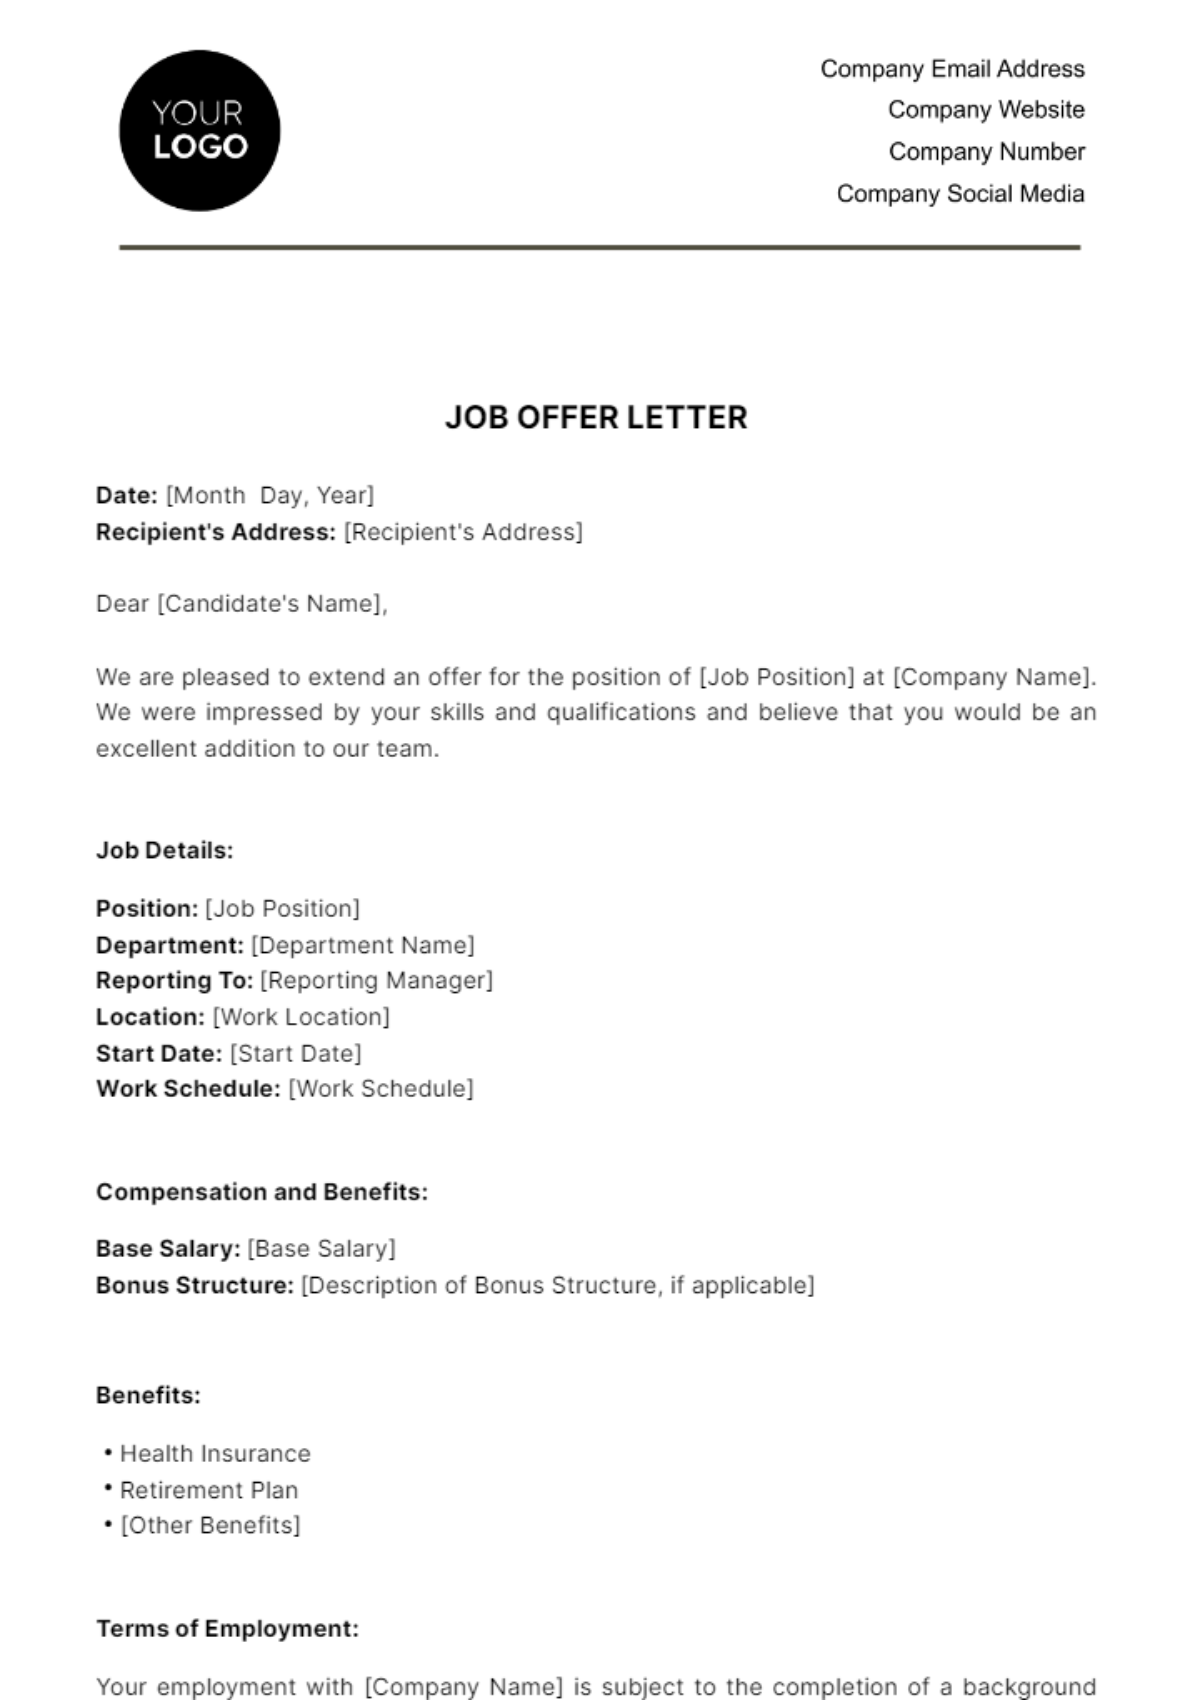 Free Job Offer Letter HR Template